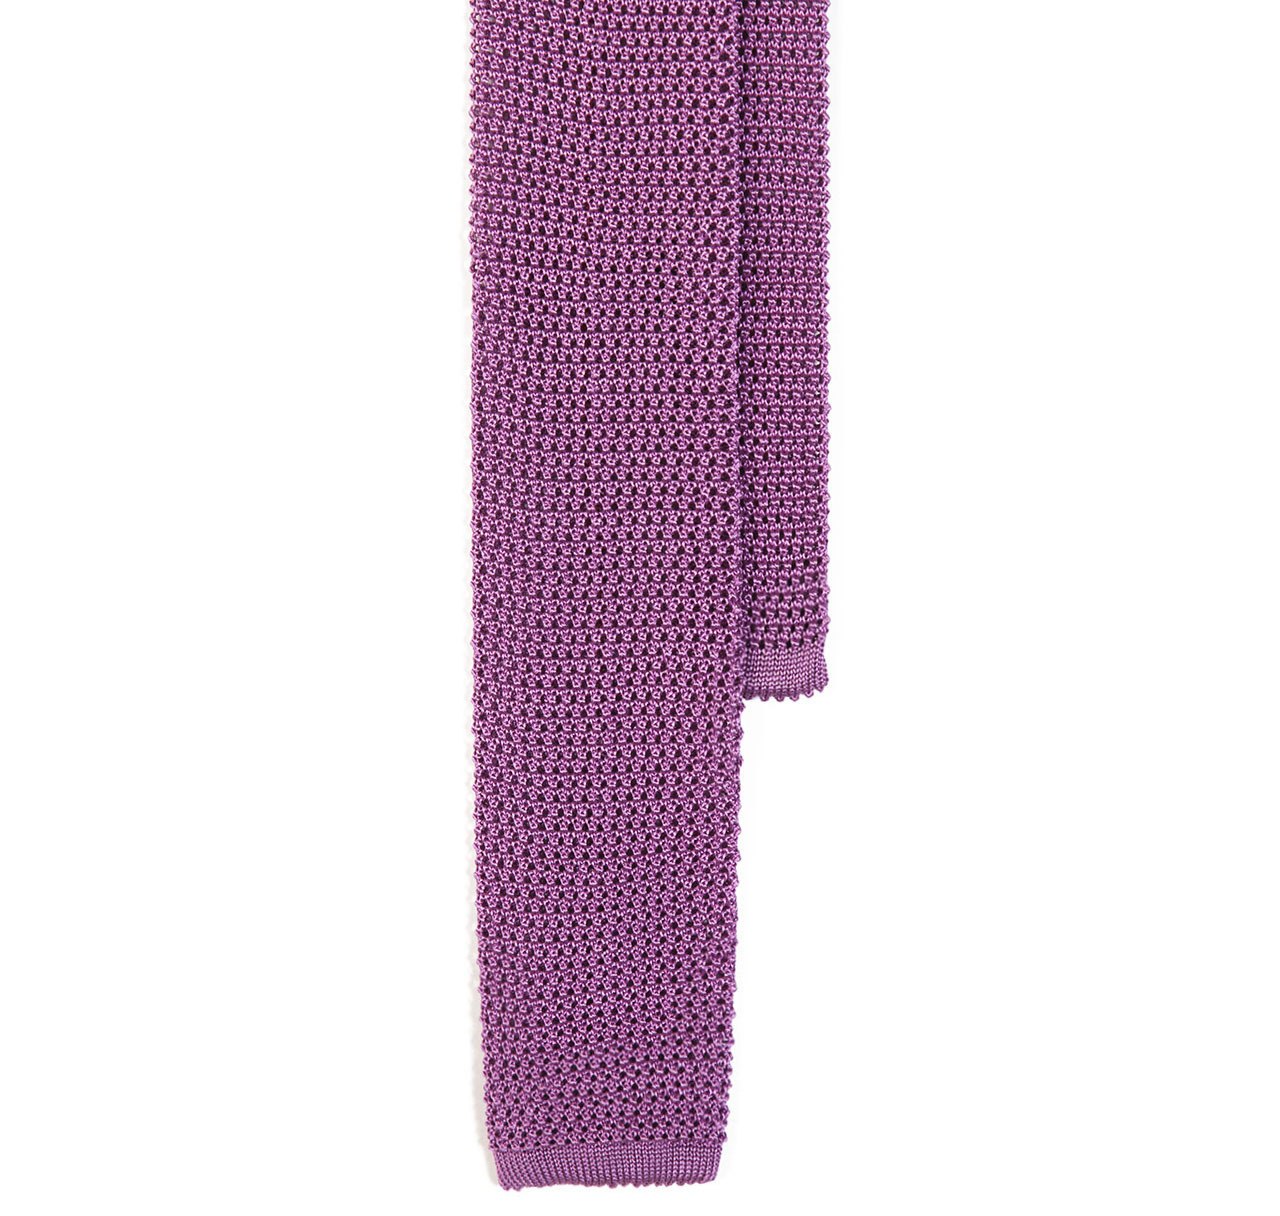 Sir Jack's Classic Knit Silk Tie in Lavender